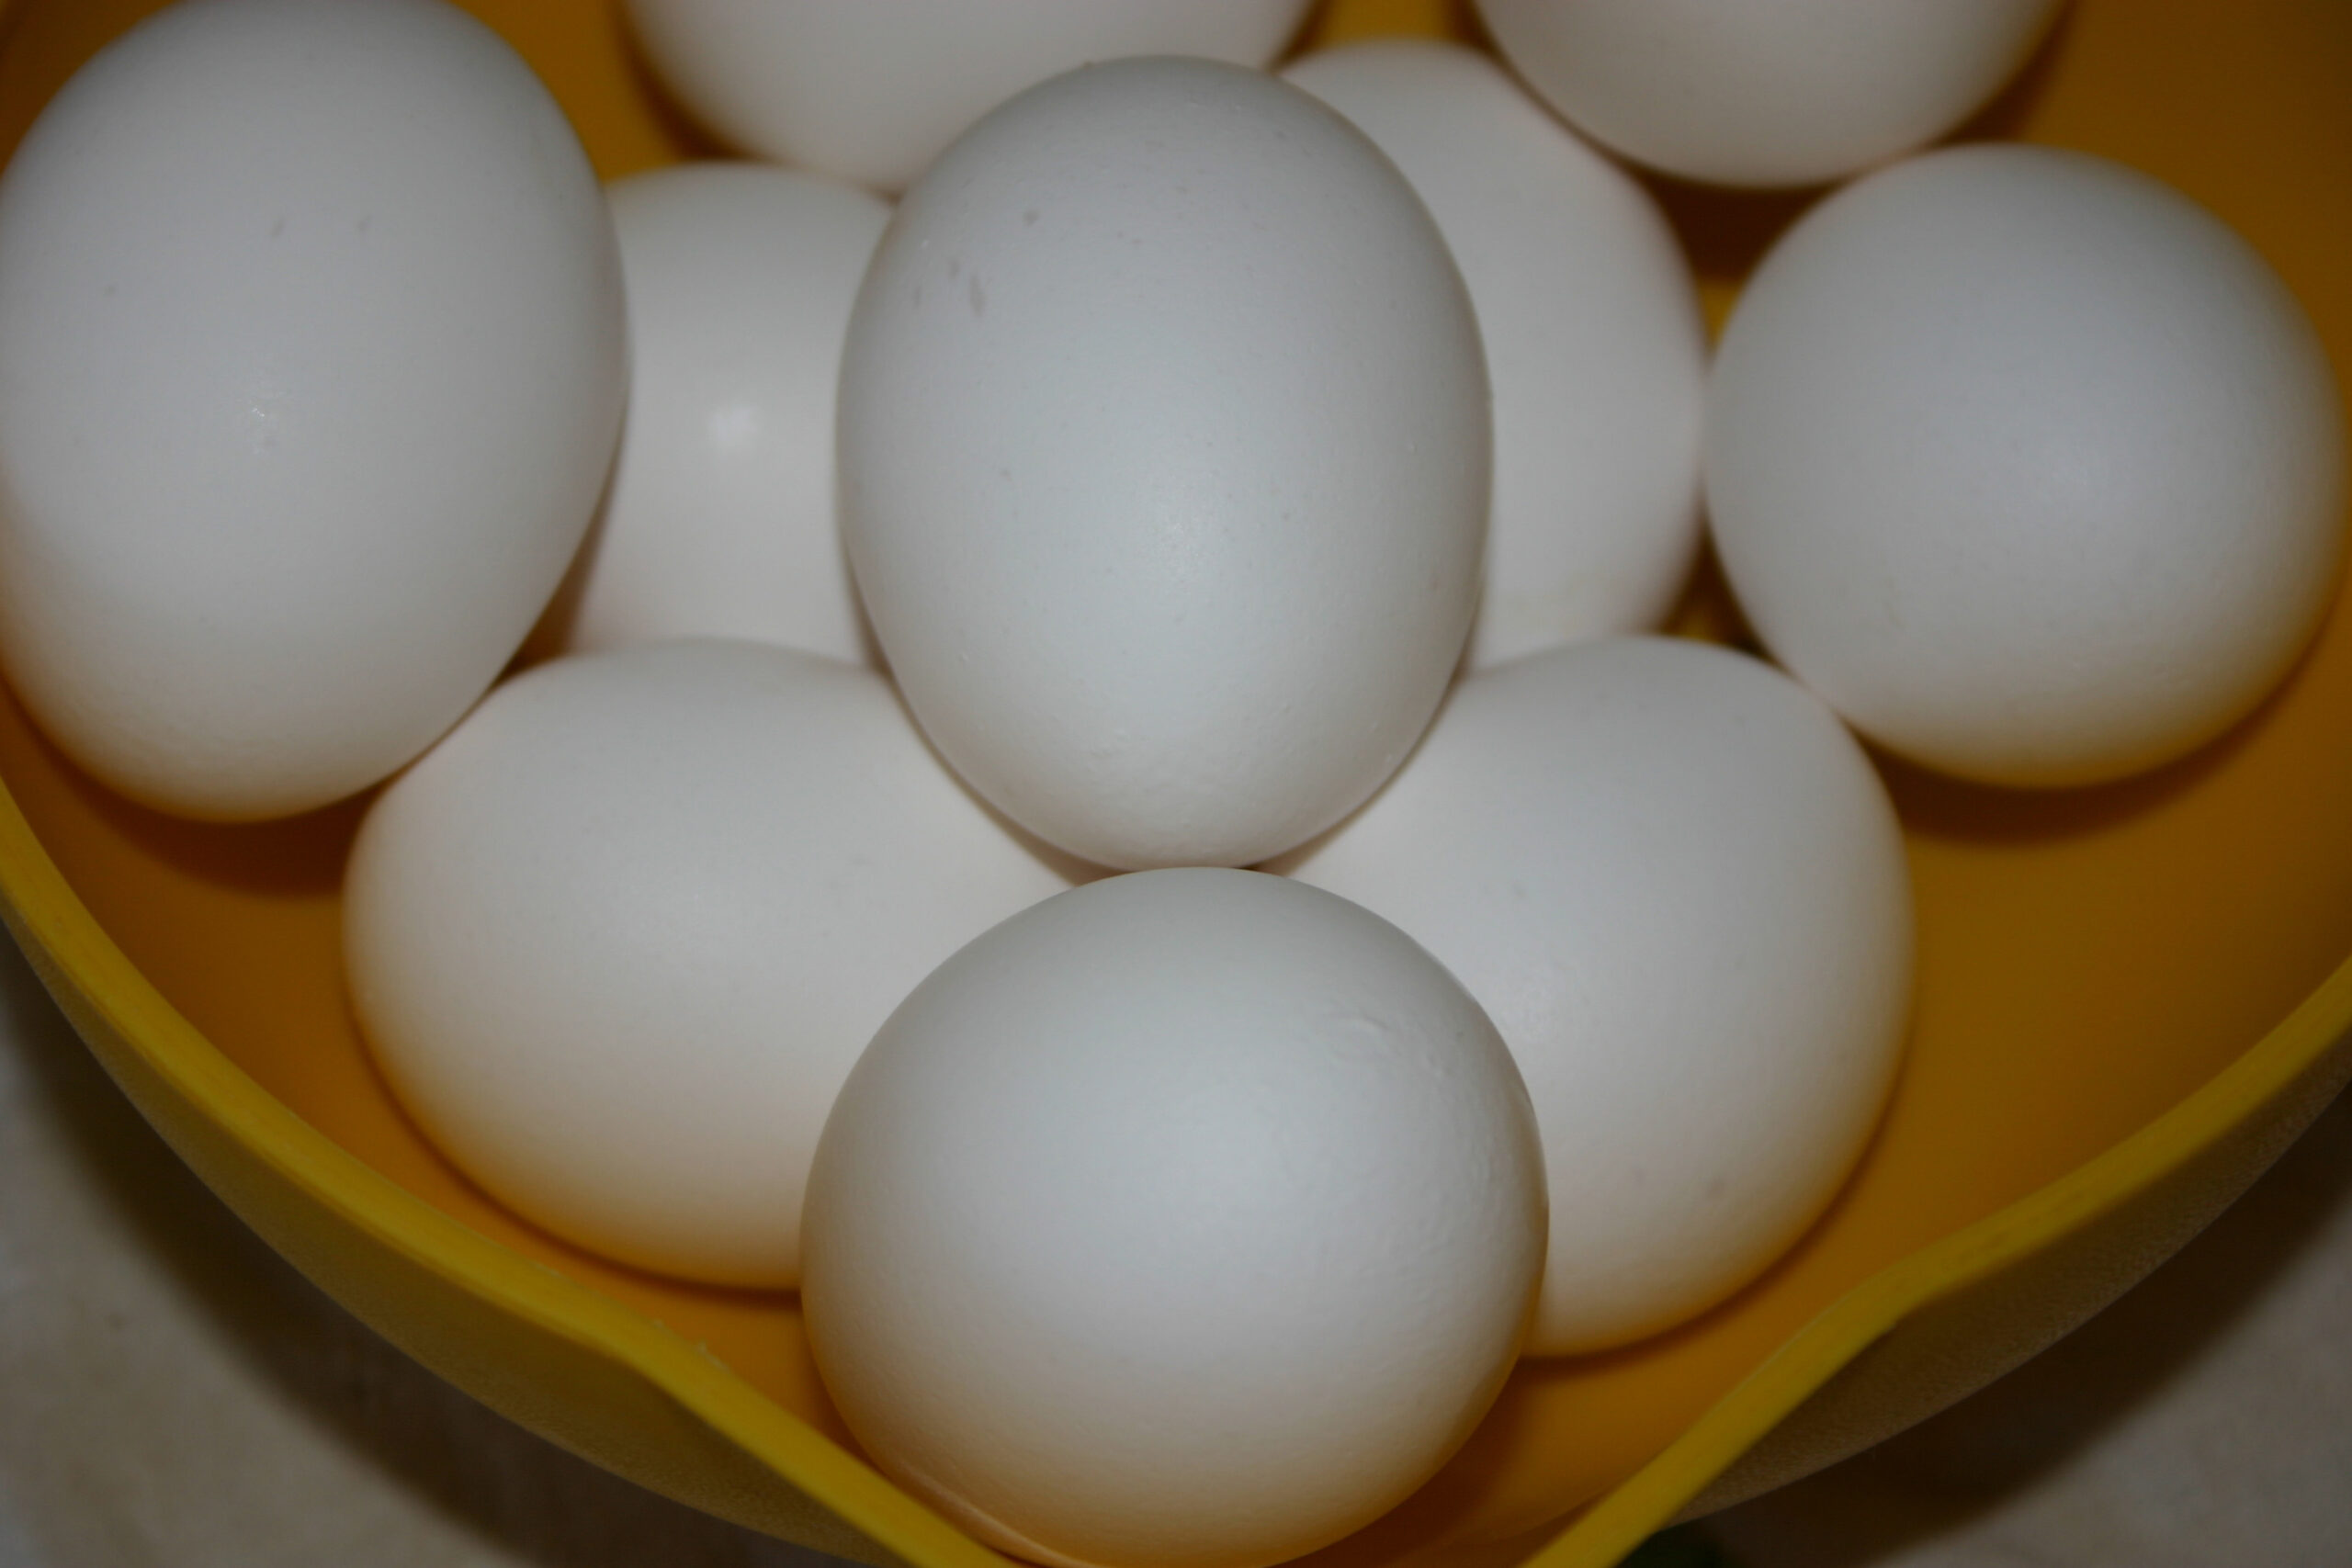 Poached Eggs with Tarragon Cream